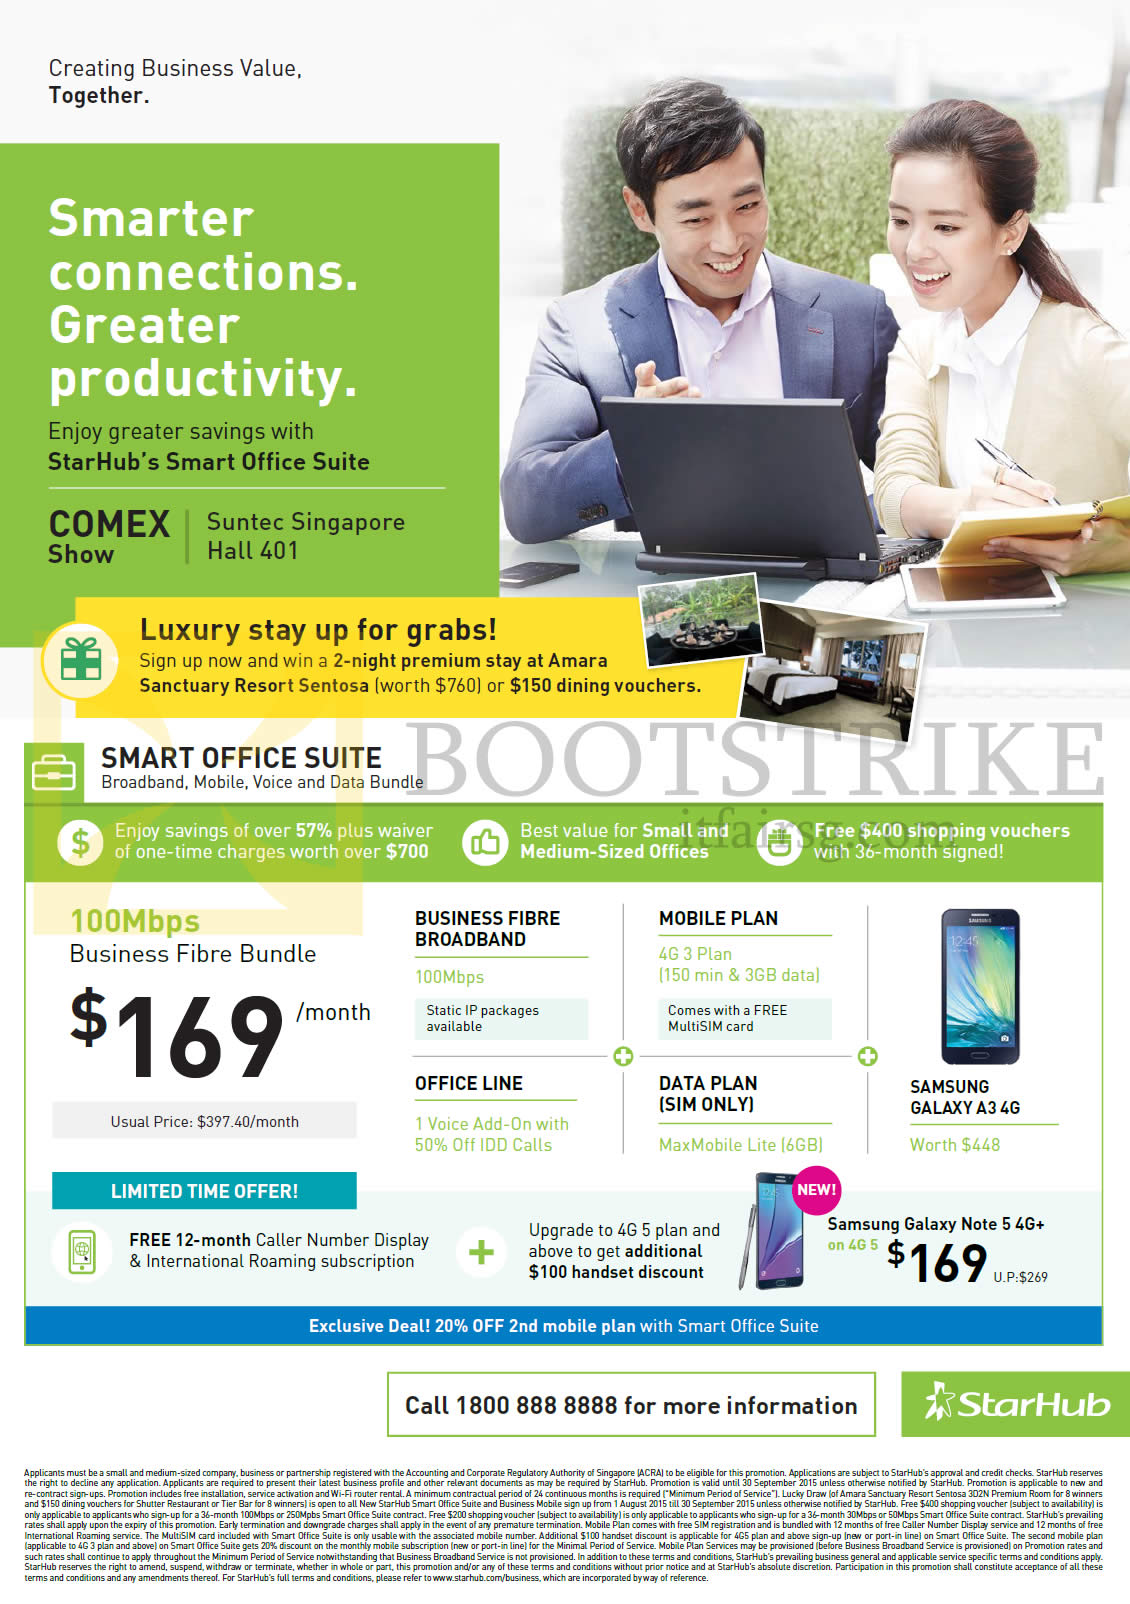 COMEX 2015 price list image brochure of Starhub Business Smart Office Suite 100Mbps Business Fibre Bundle